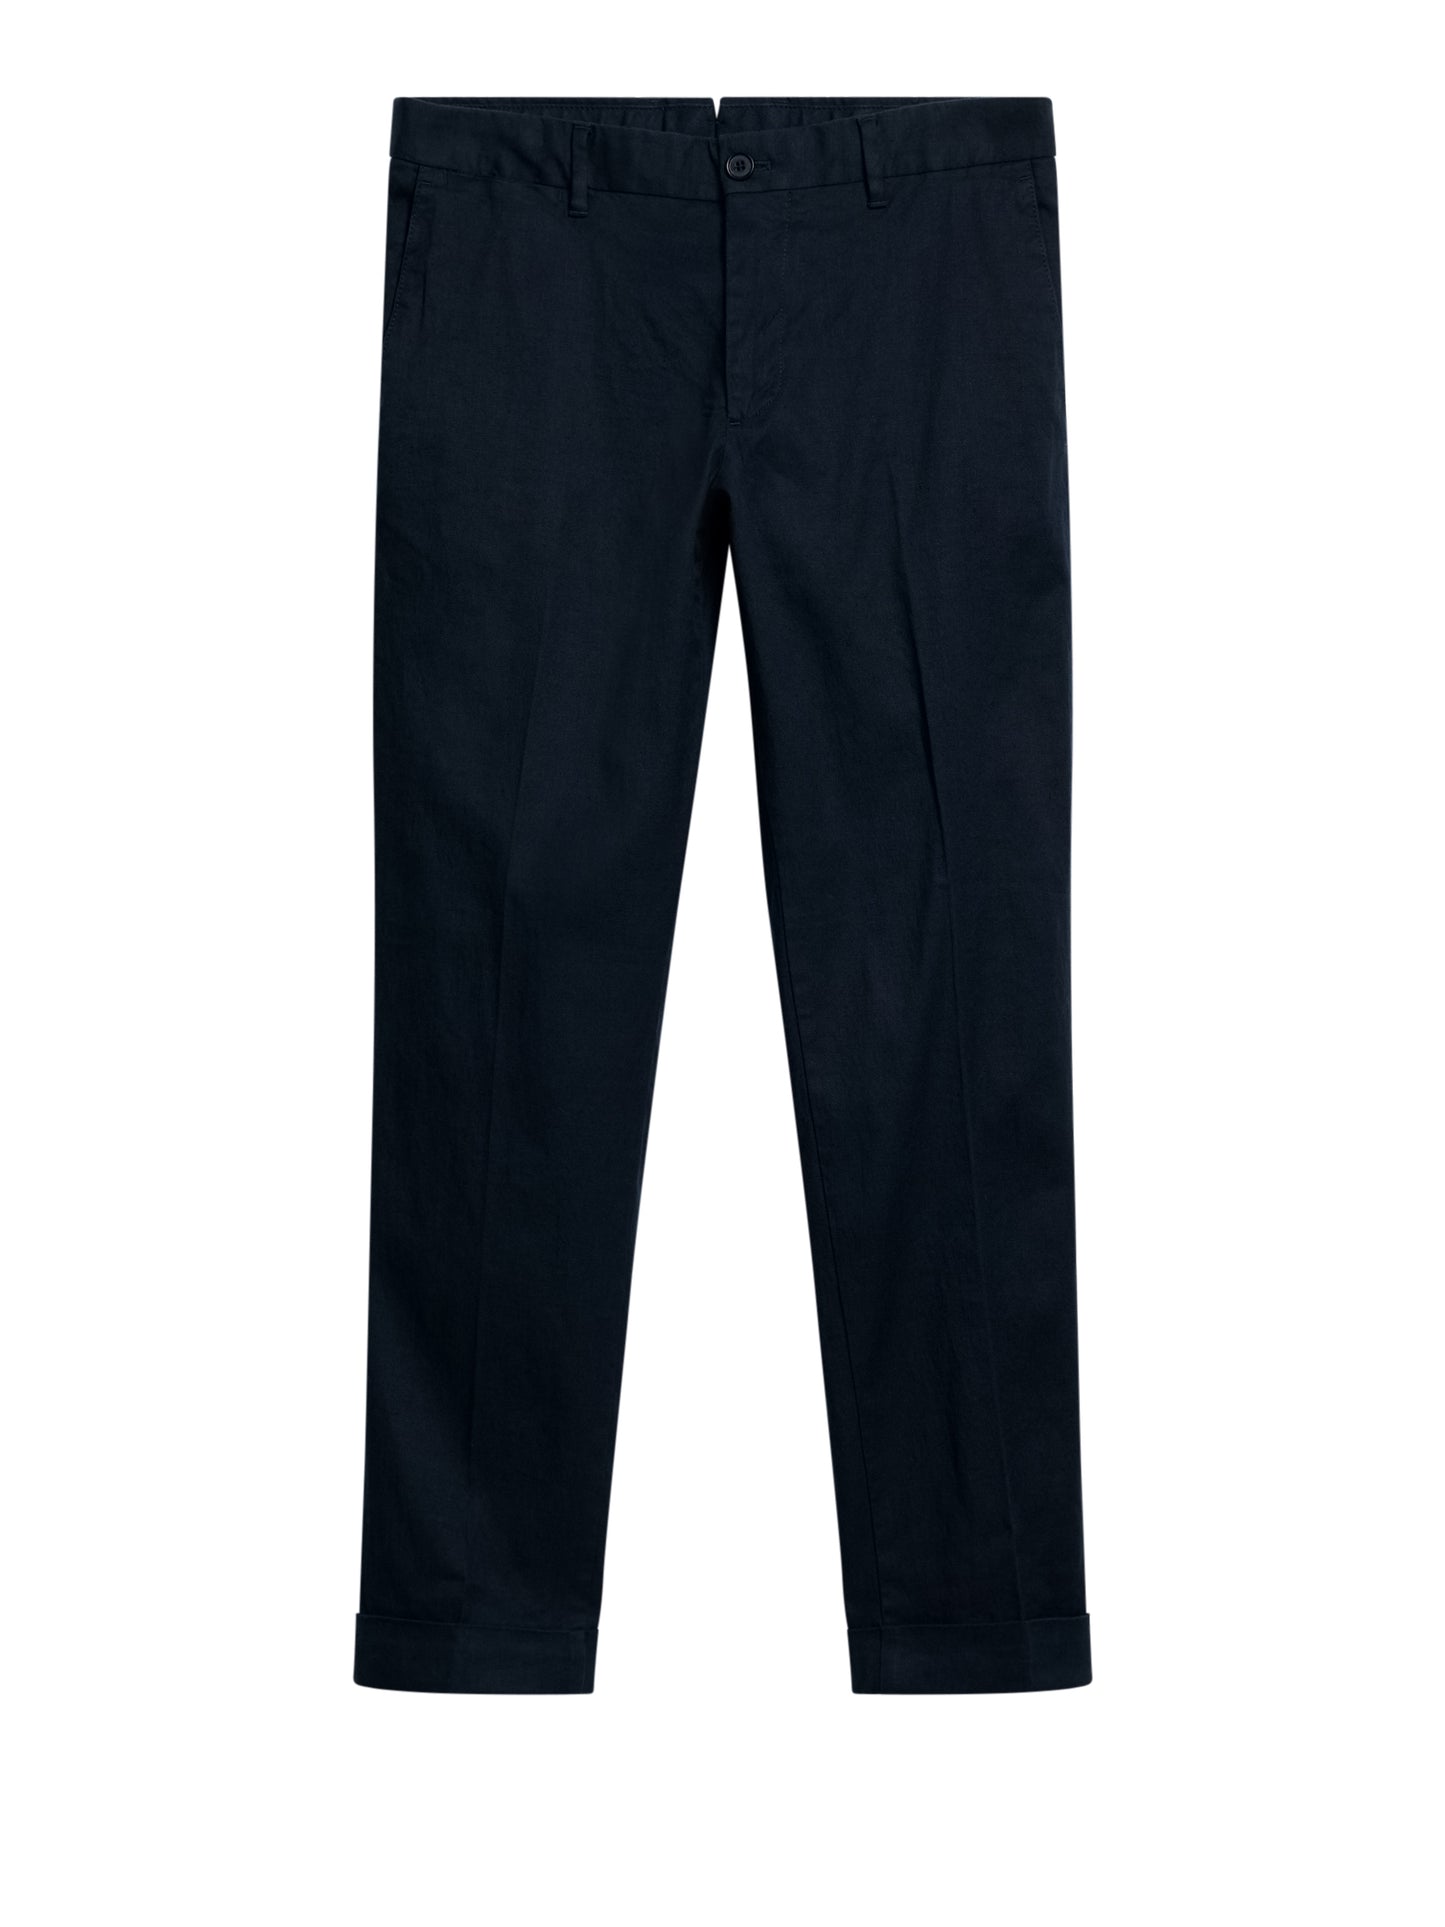 Grant Linen Stretch Pants / JL Navy